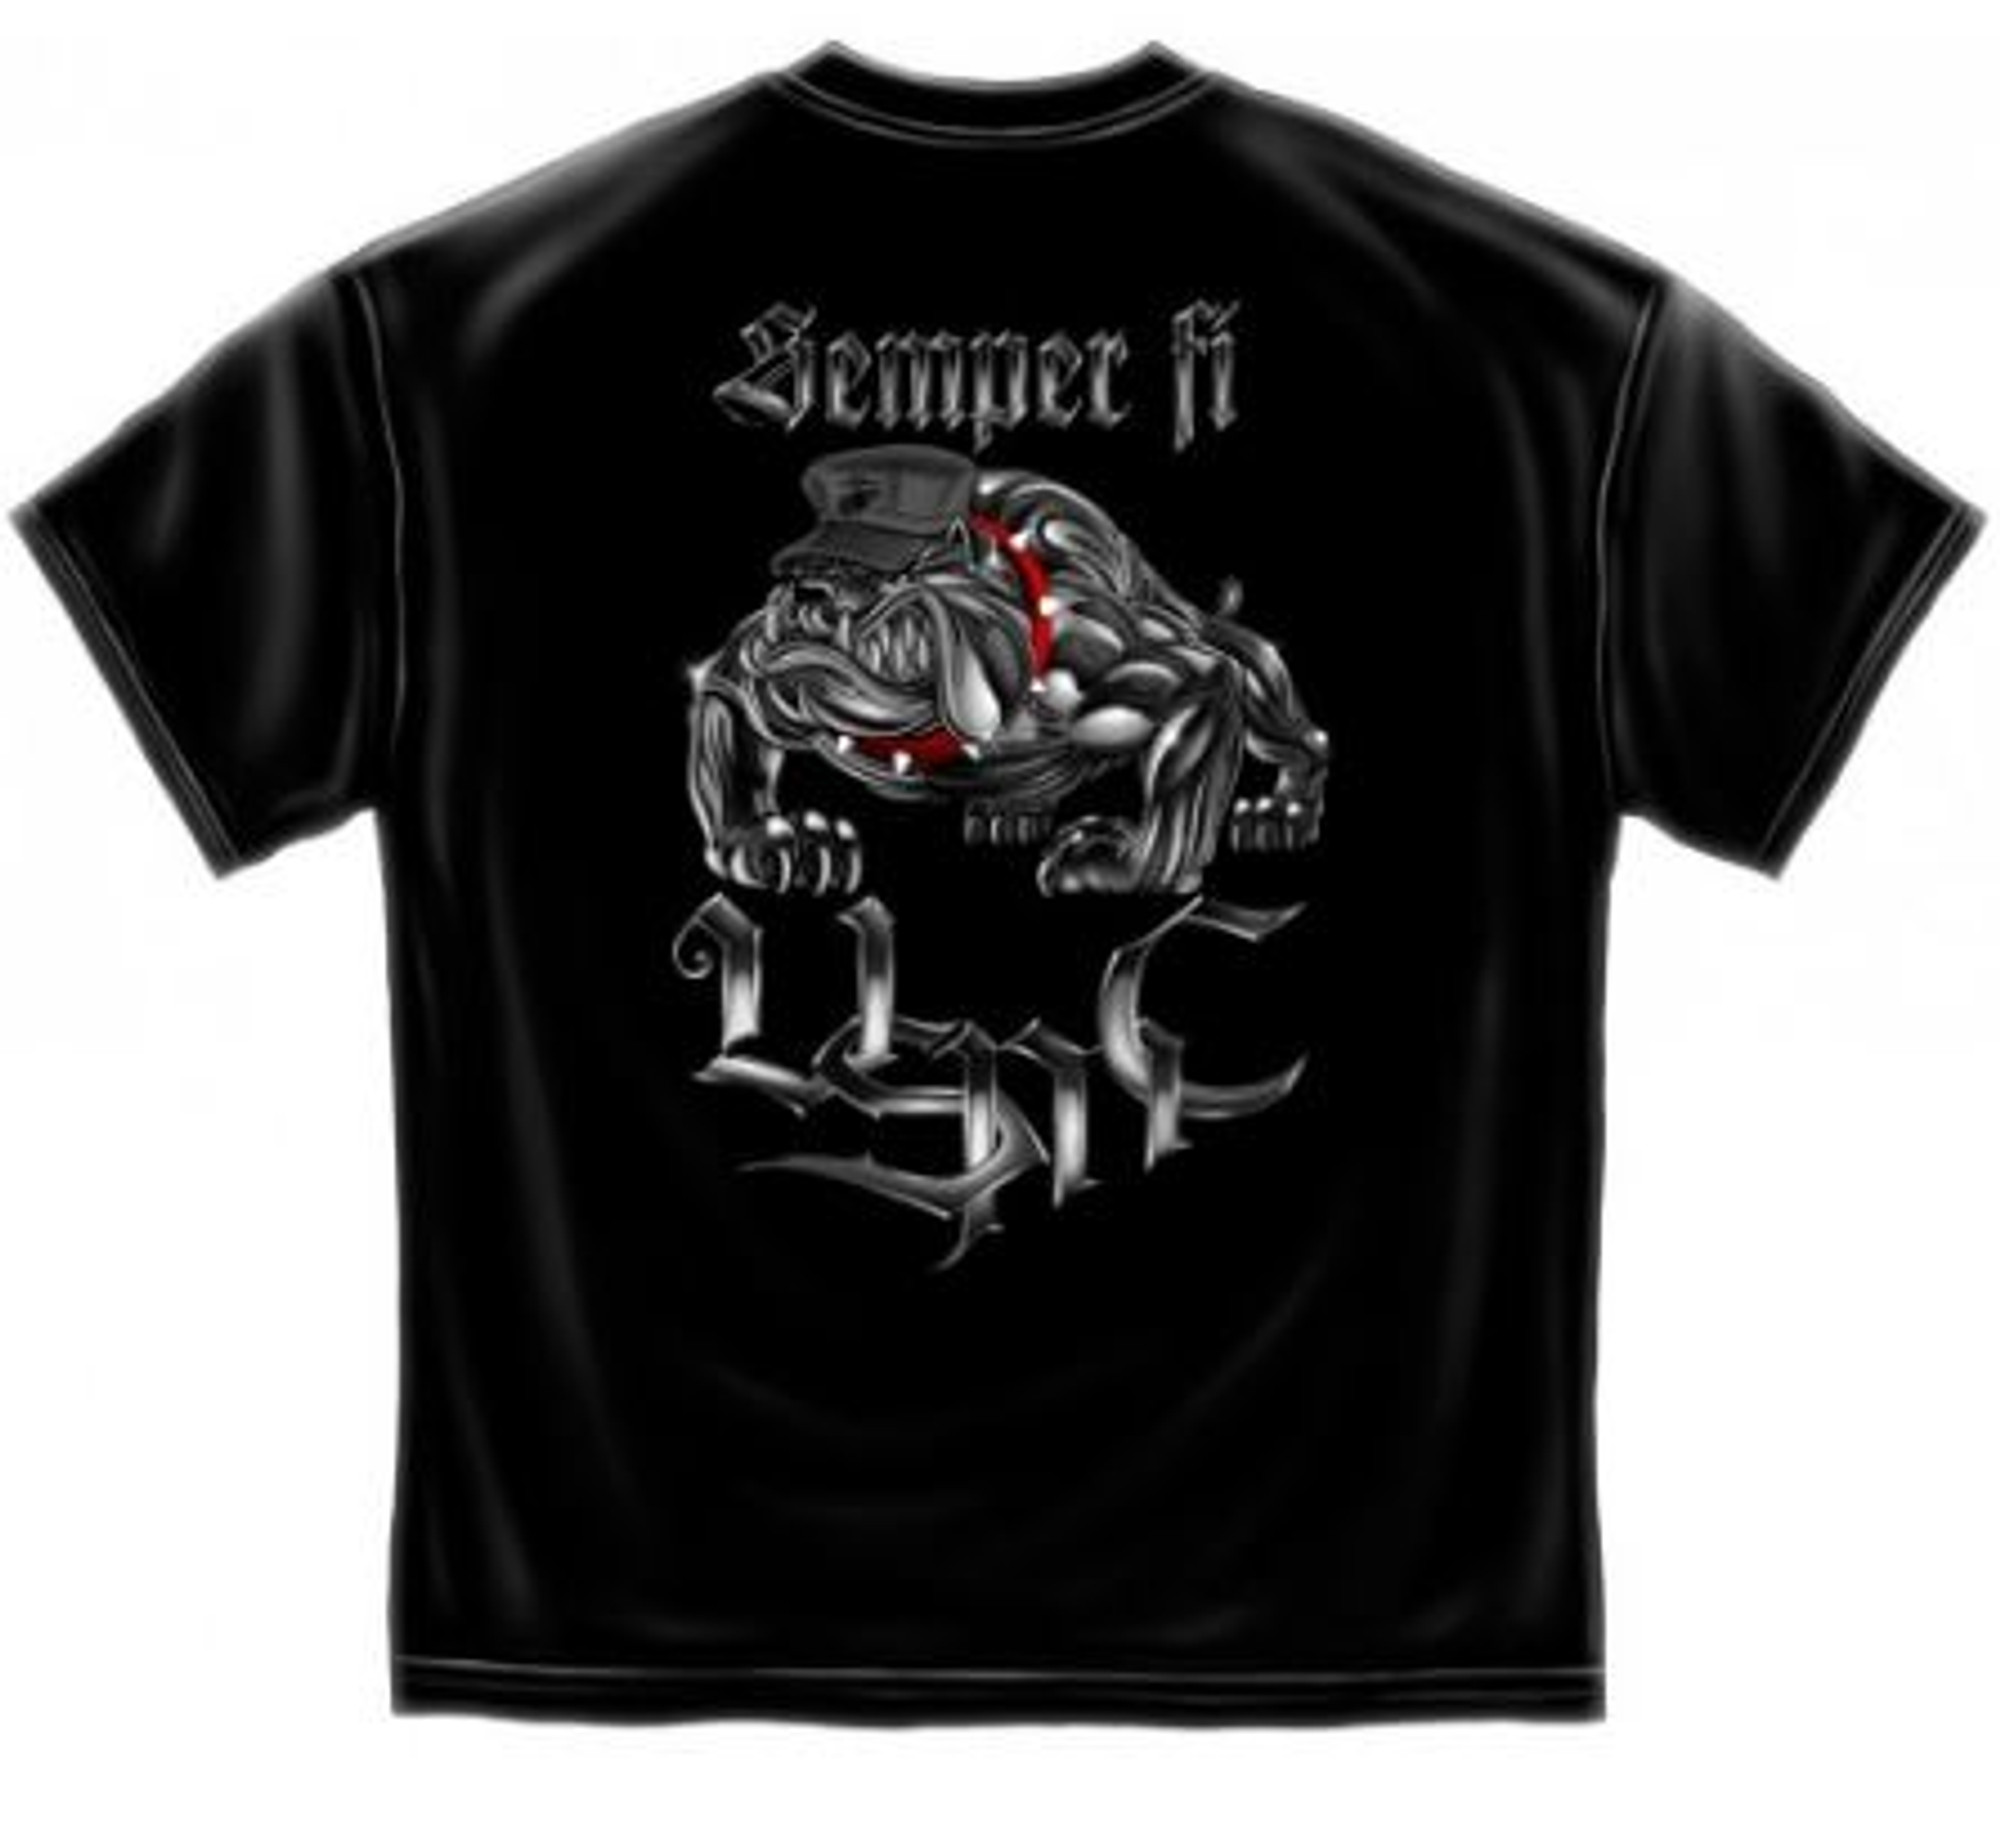 USMC "Semper Fi" T-Shirt